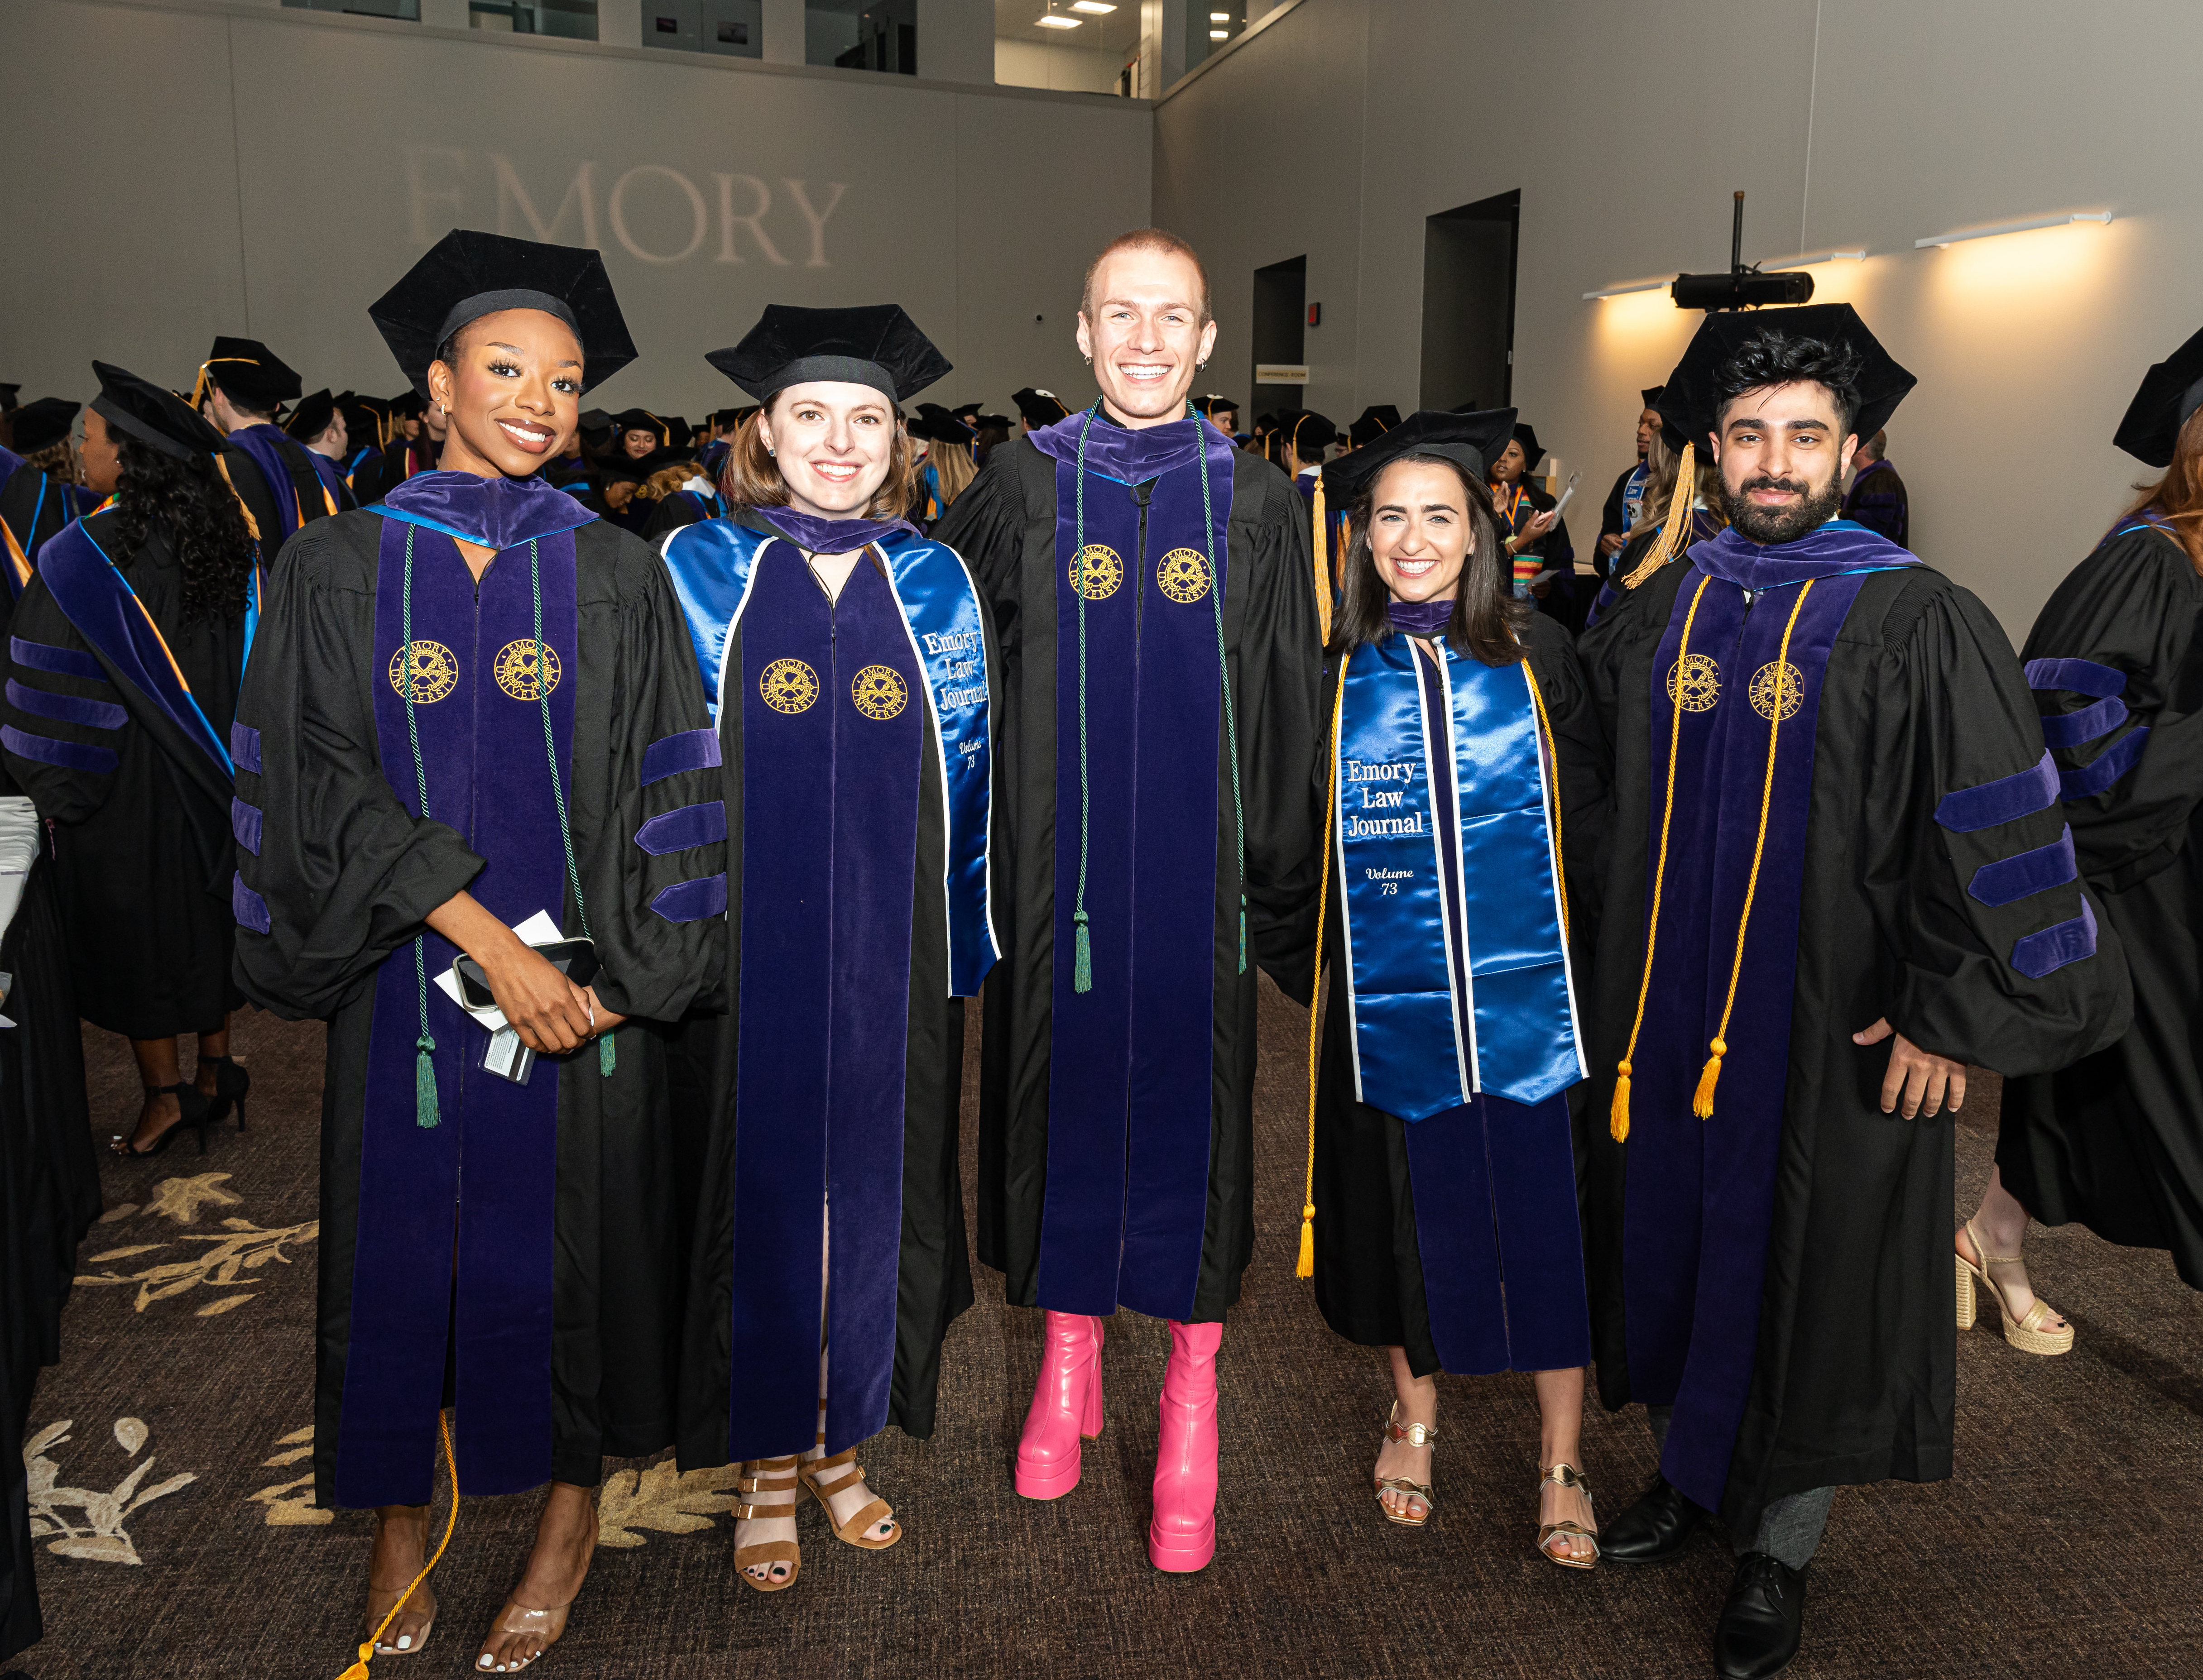 Emory Law students at graduation